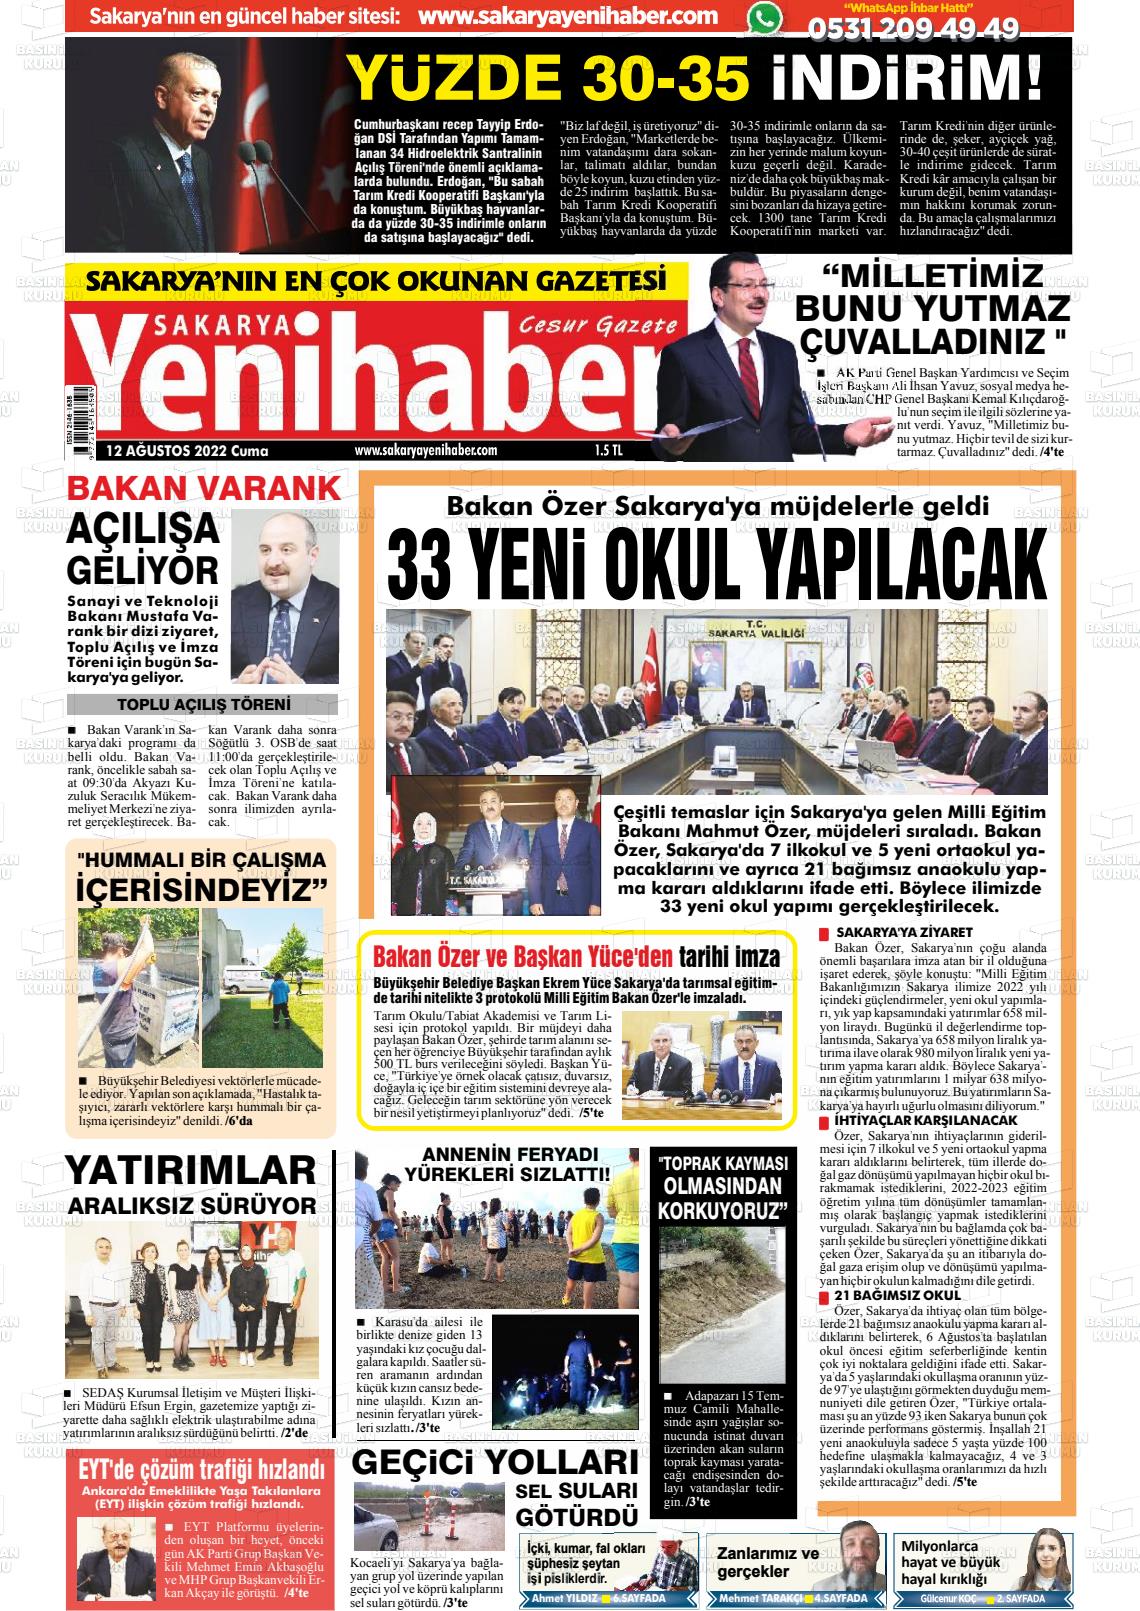 12 Ağustos 2022 Sakarya Yeni Haber Gazete Manşeti